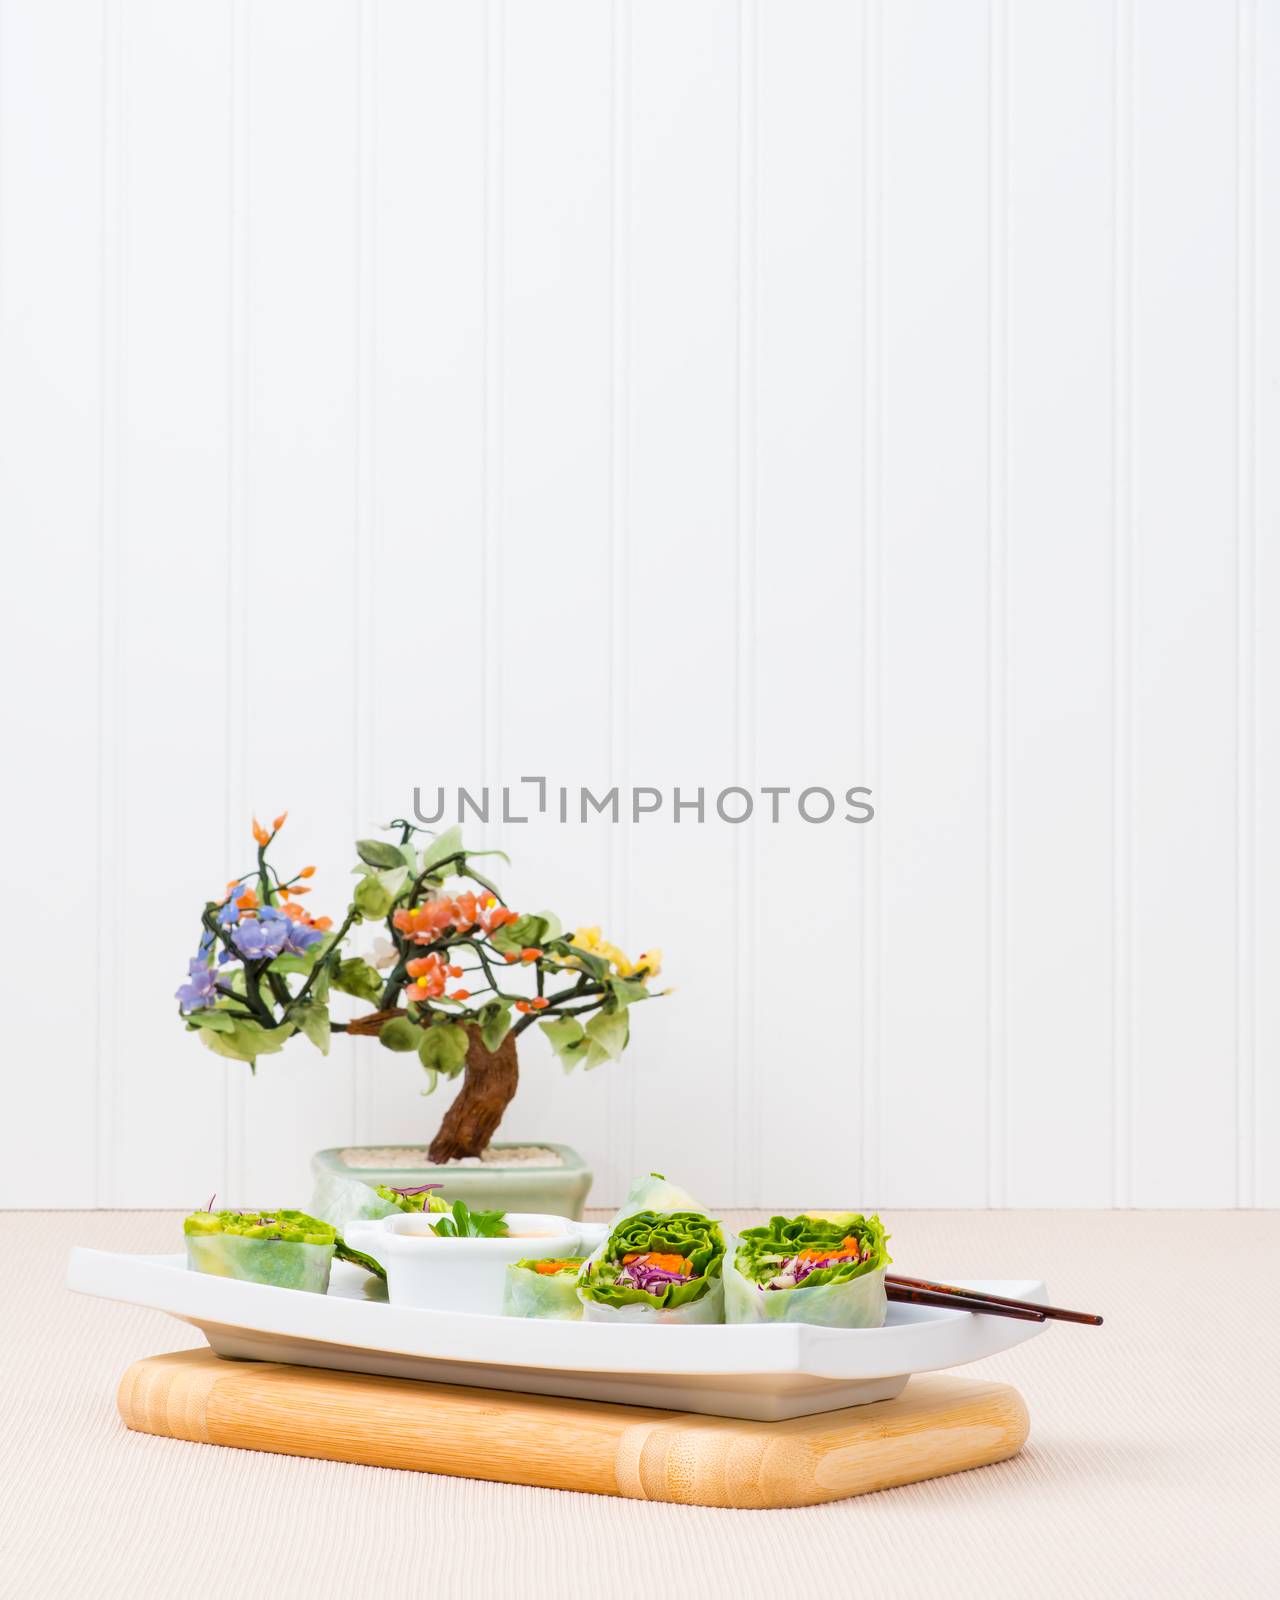 Spring Rolls Vegetarian by billberryphotography